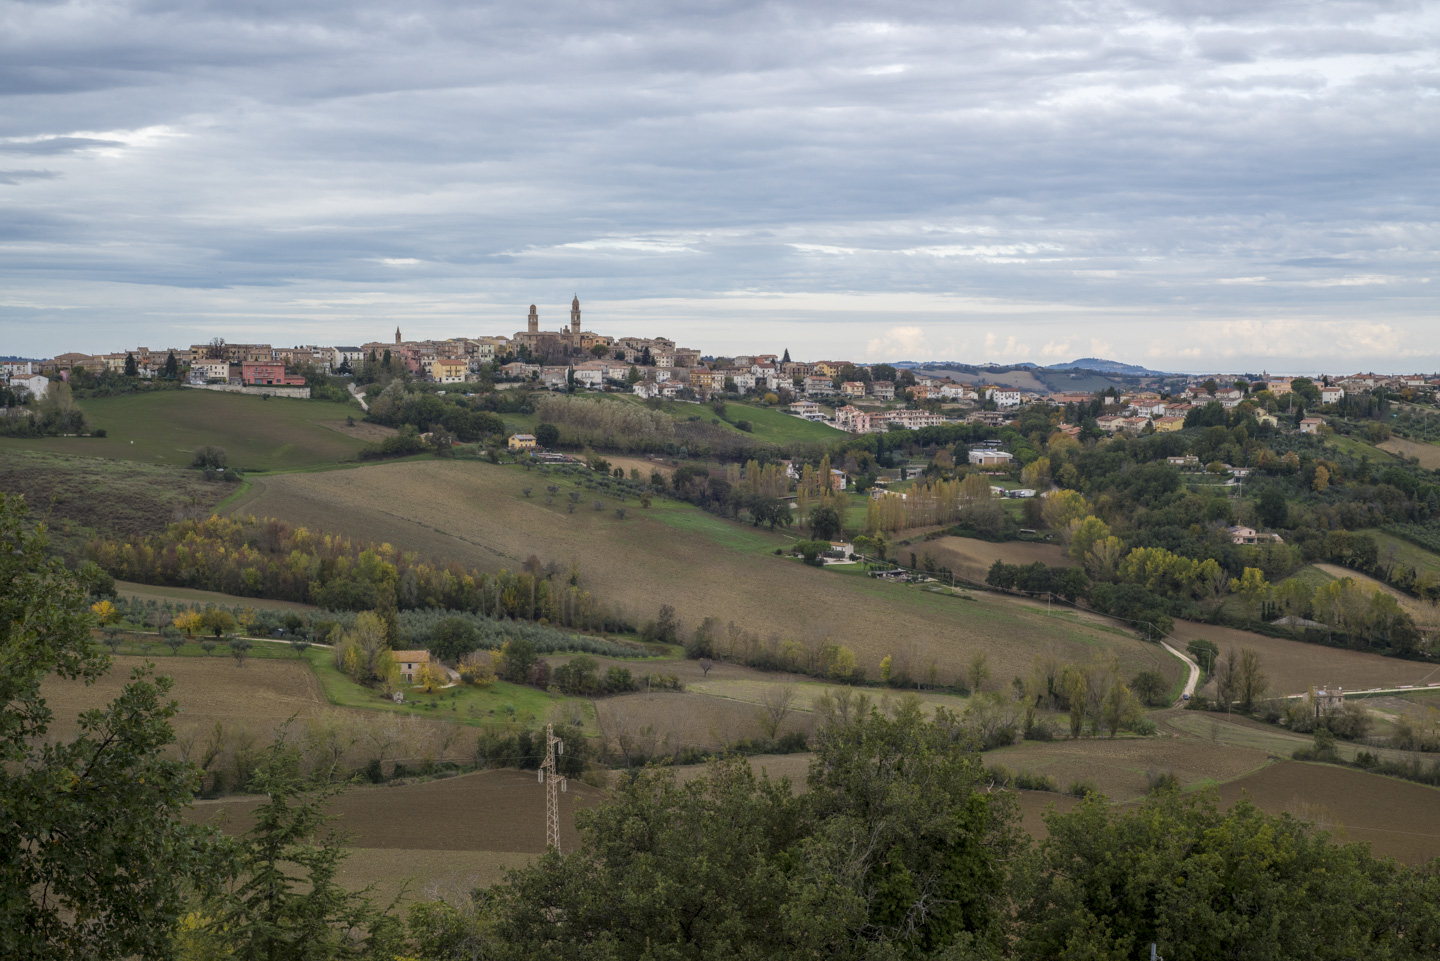 View of Ociano from Mondavio